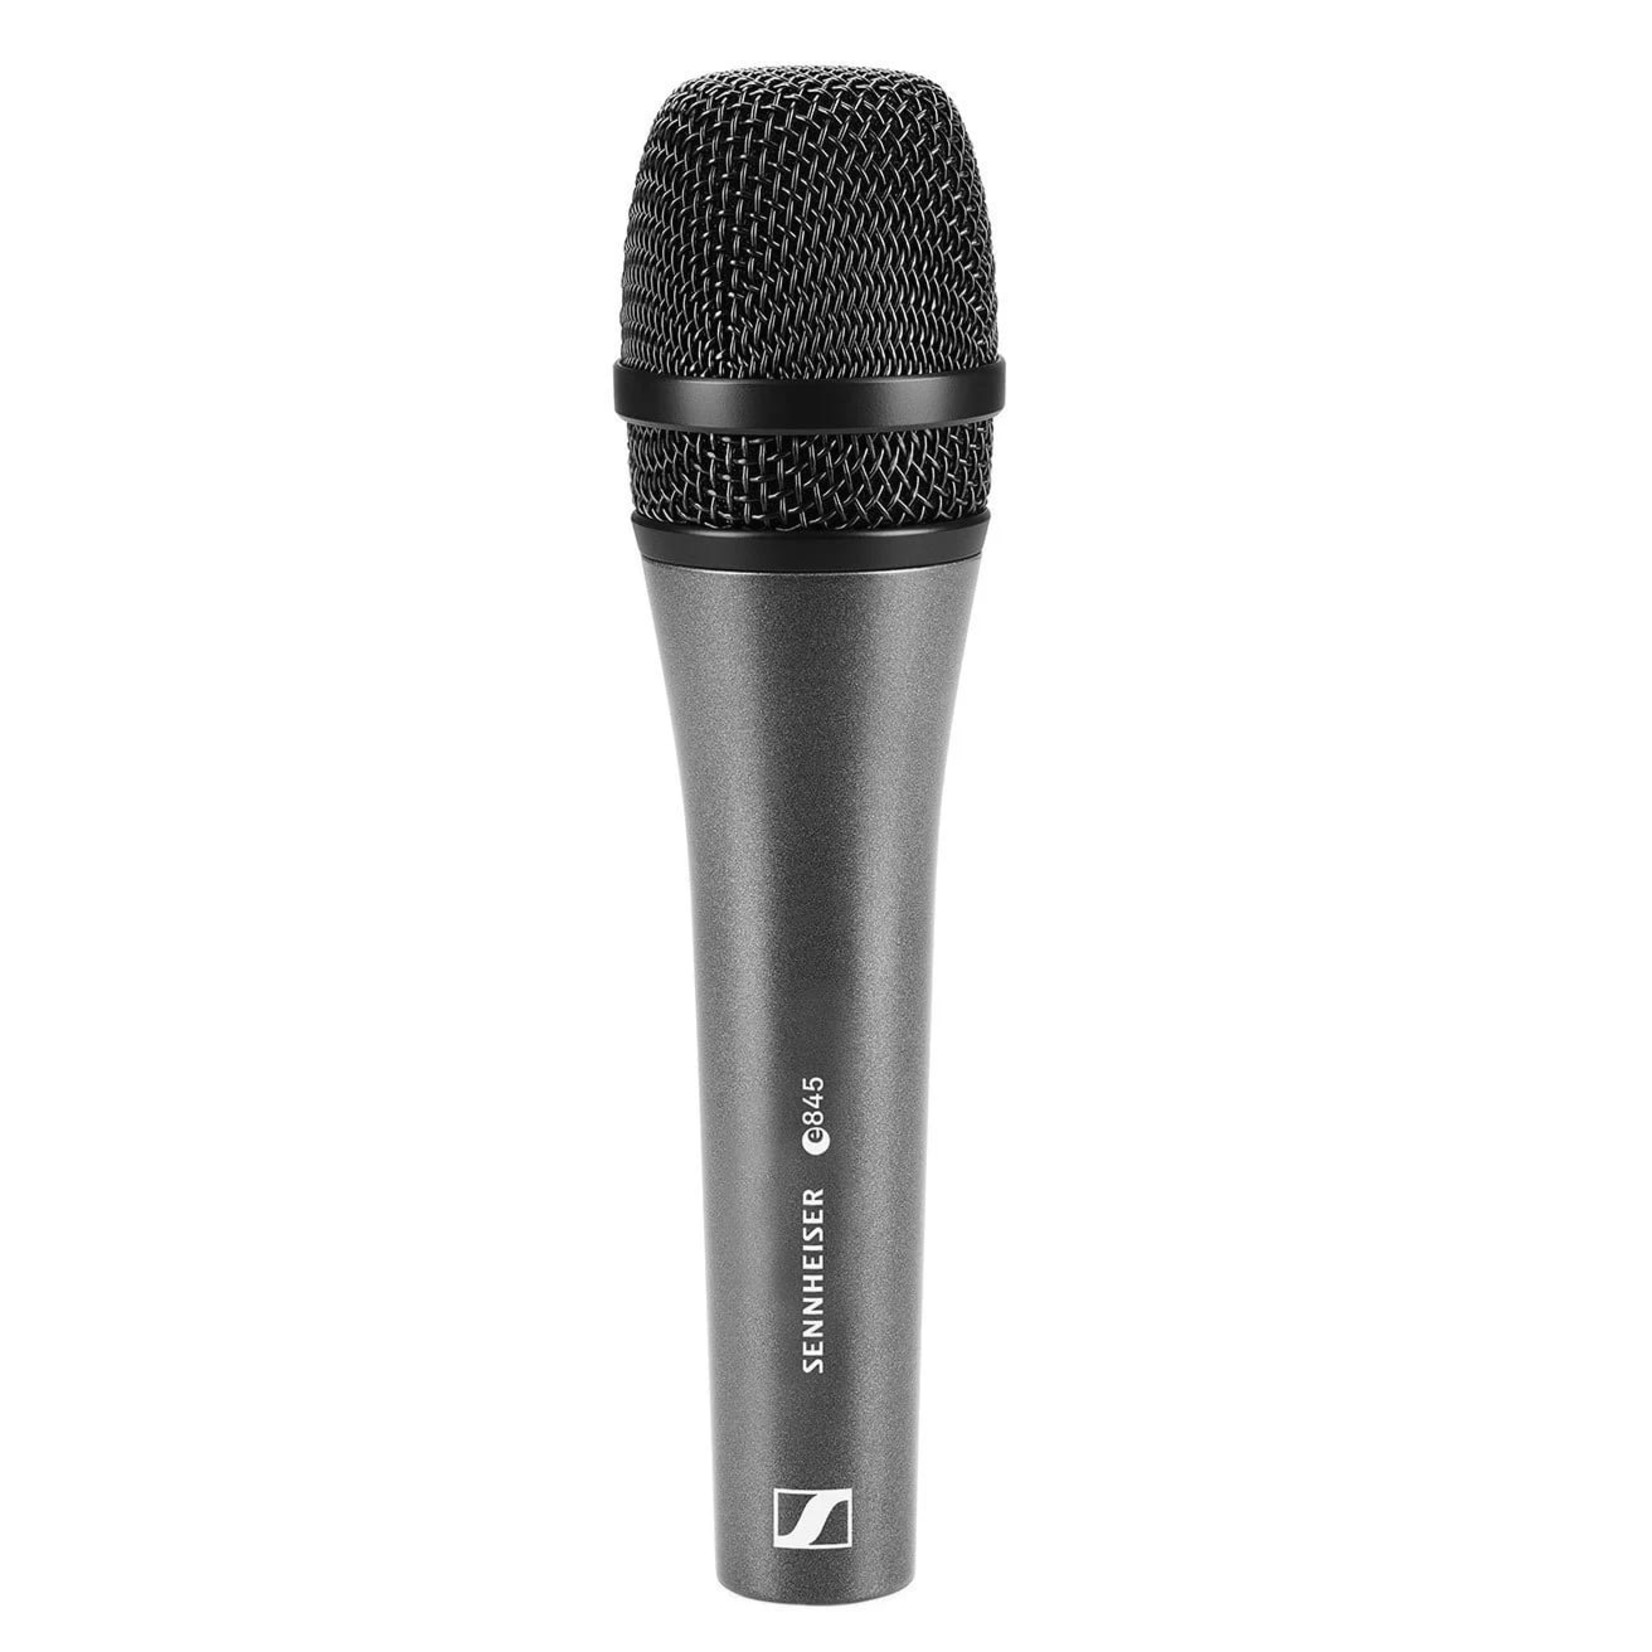 Sennheiser Sennheiser e845 Handheld Supercardioid Dynamic Vocal Microphone